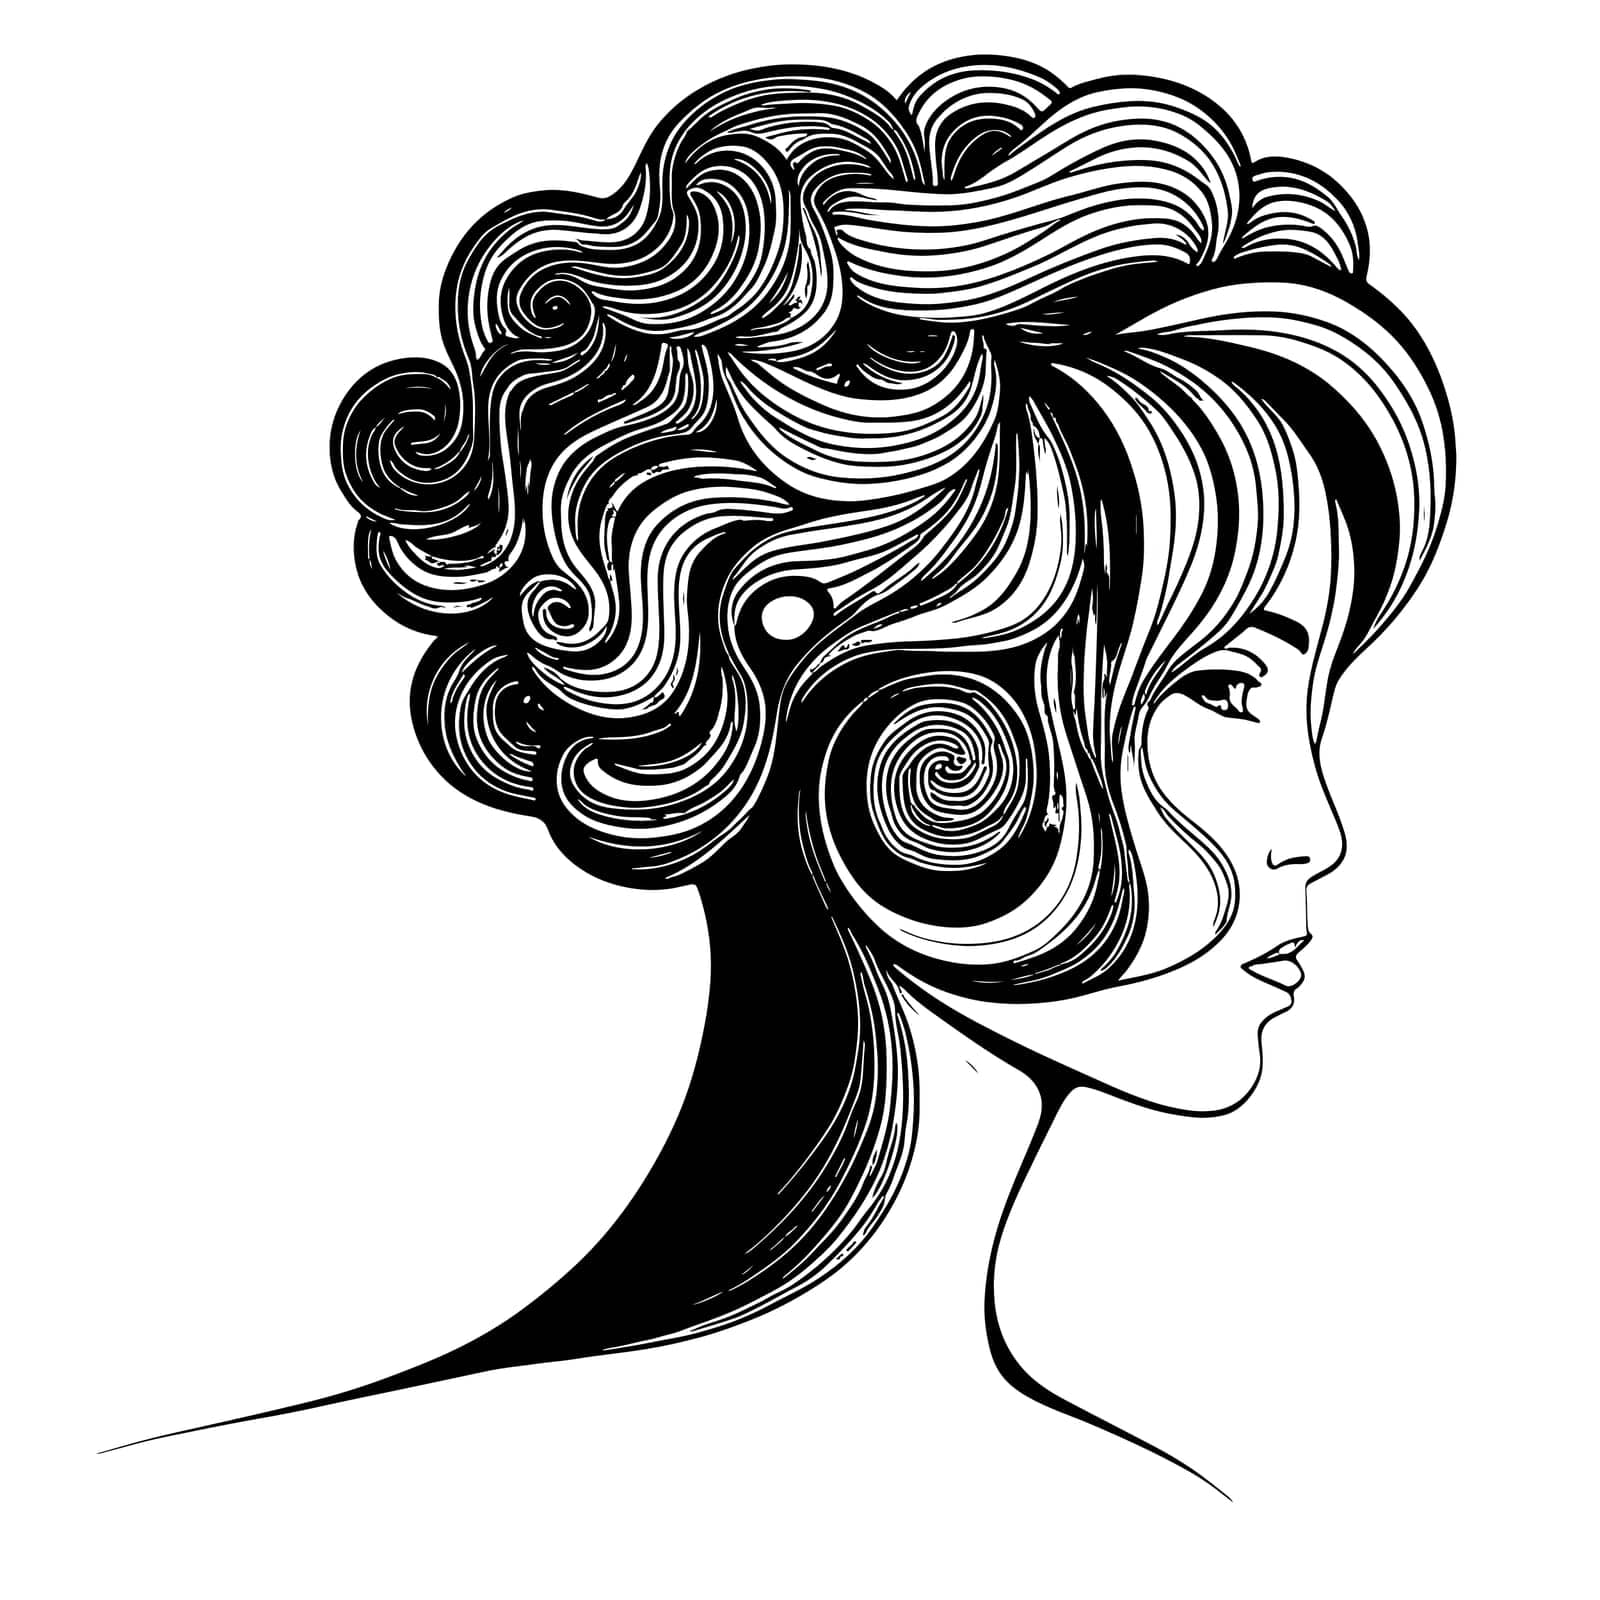 Sketch of Female profile silhouette. Art hairstyle black and white design. by EkaterinaPereslavtseva